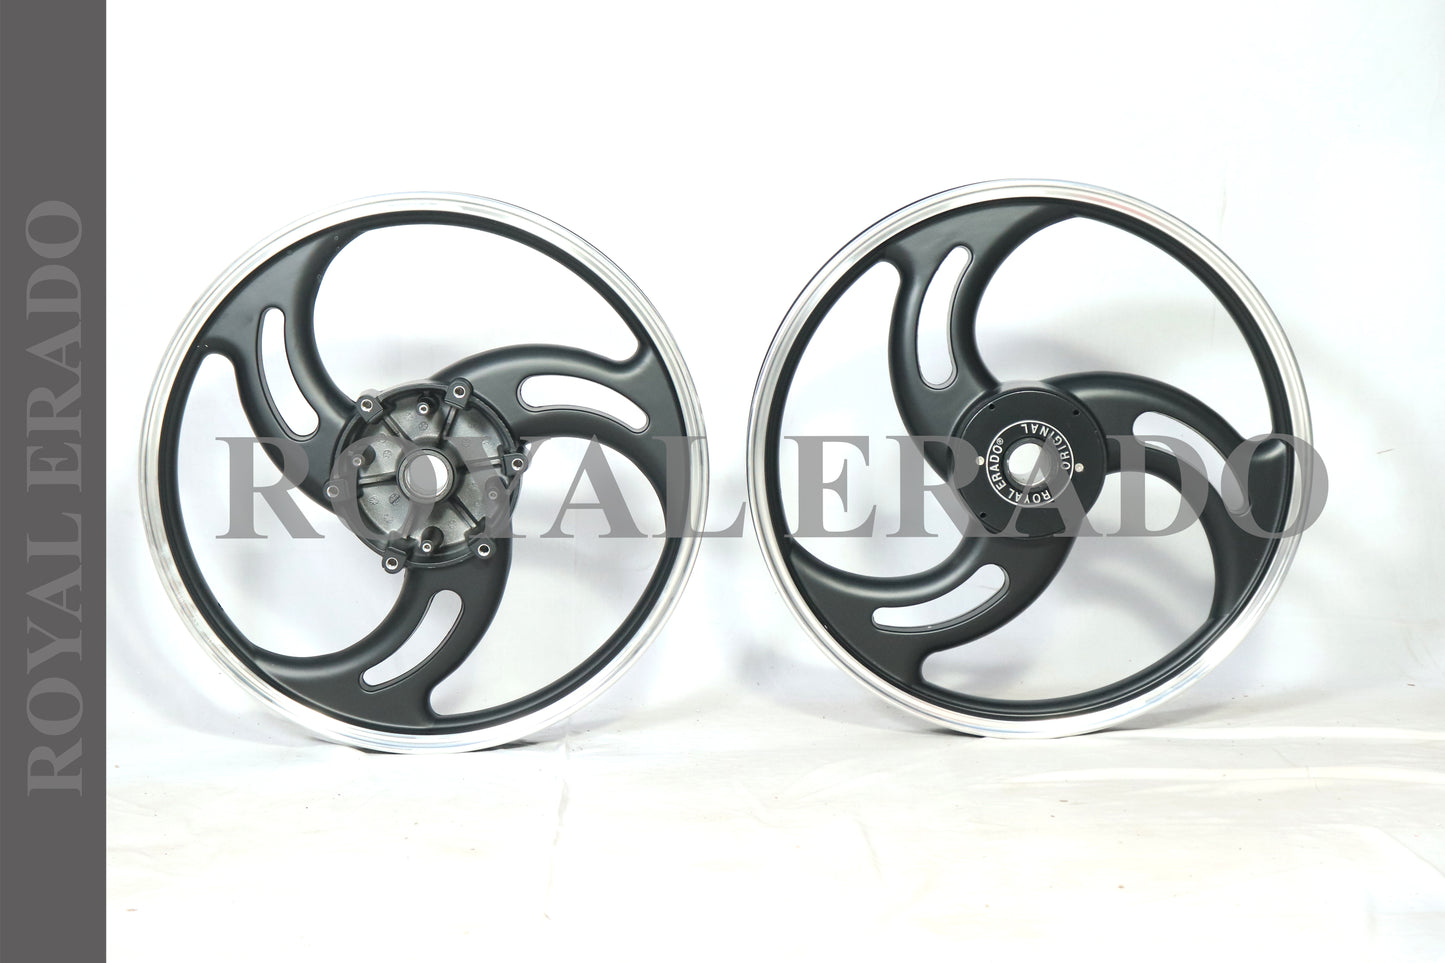 3 Spokes BLACK Alloy Wheel for STANDARD ABS Royal-Enfield Bullet X 350CC, Electra, Thunderbird 2010 model